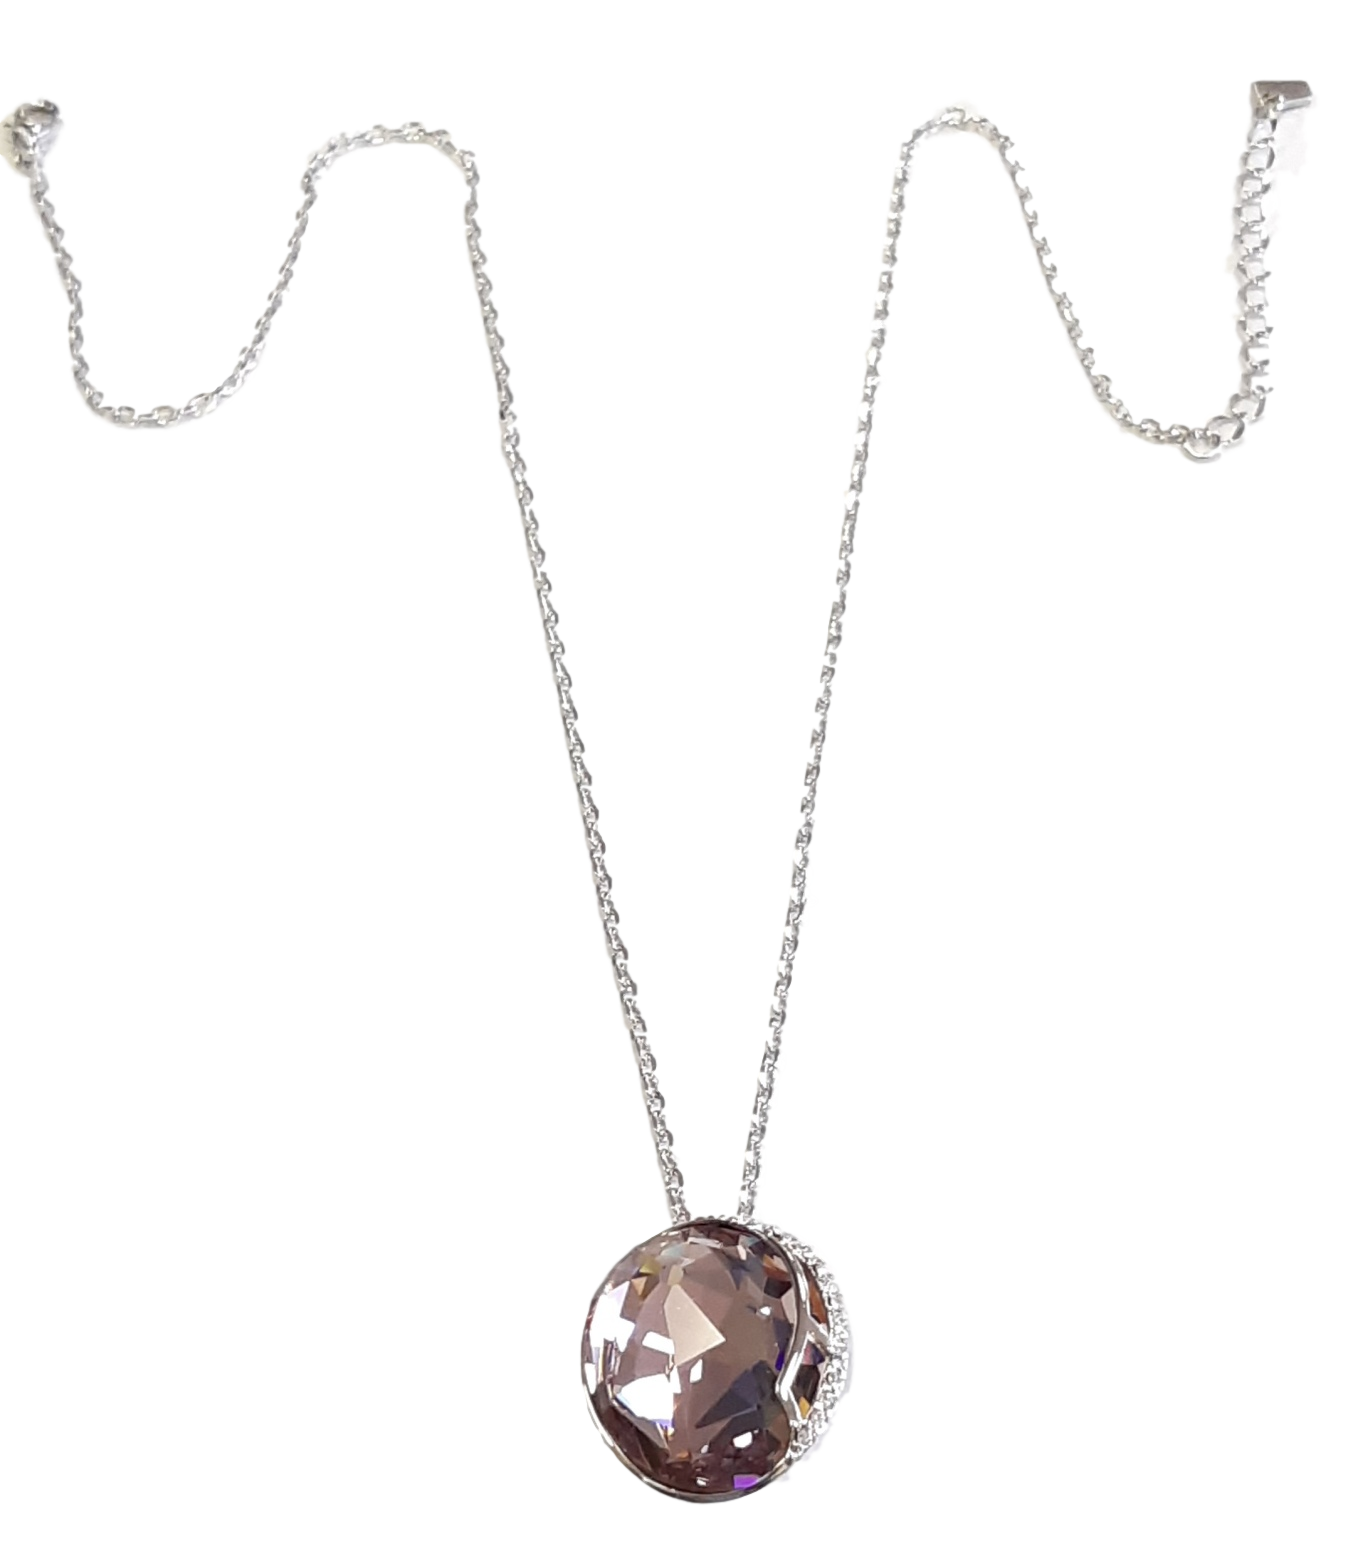 Swarovski Elements Crystal Rhinestone Pendant Necklace - Indigo